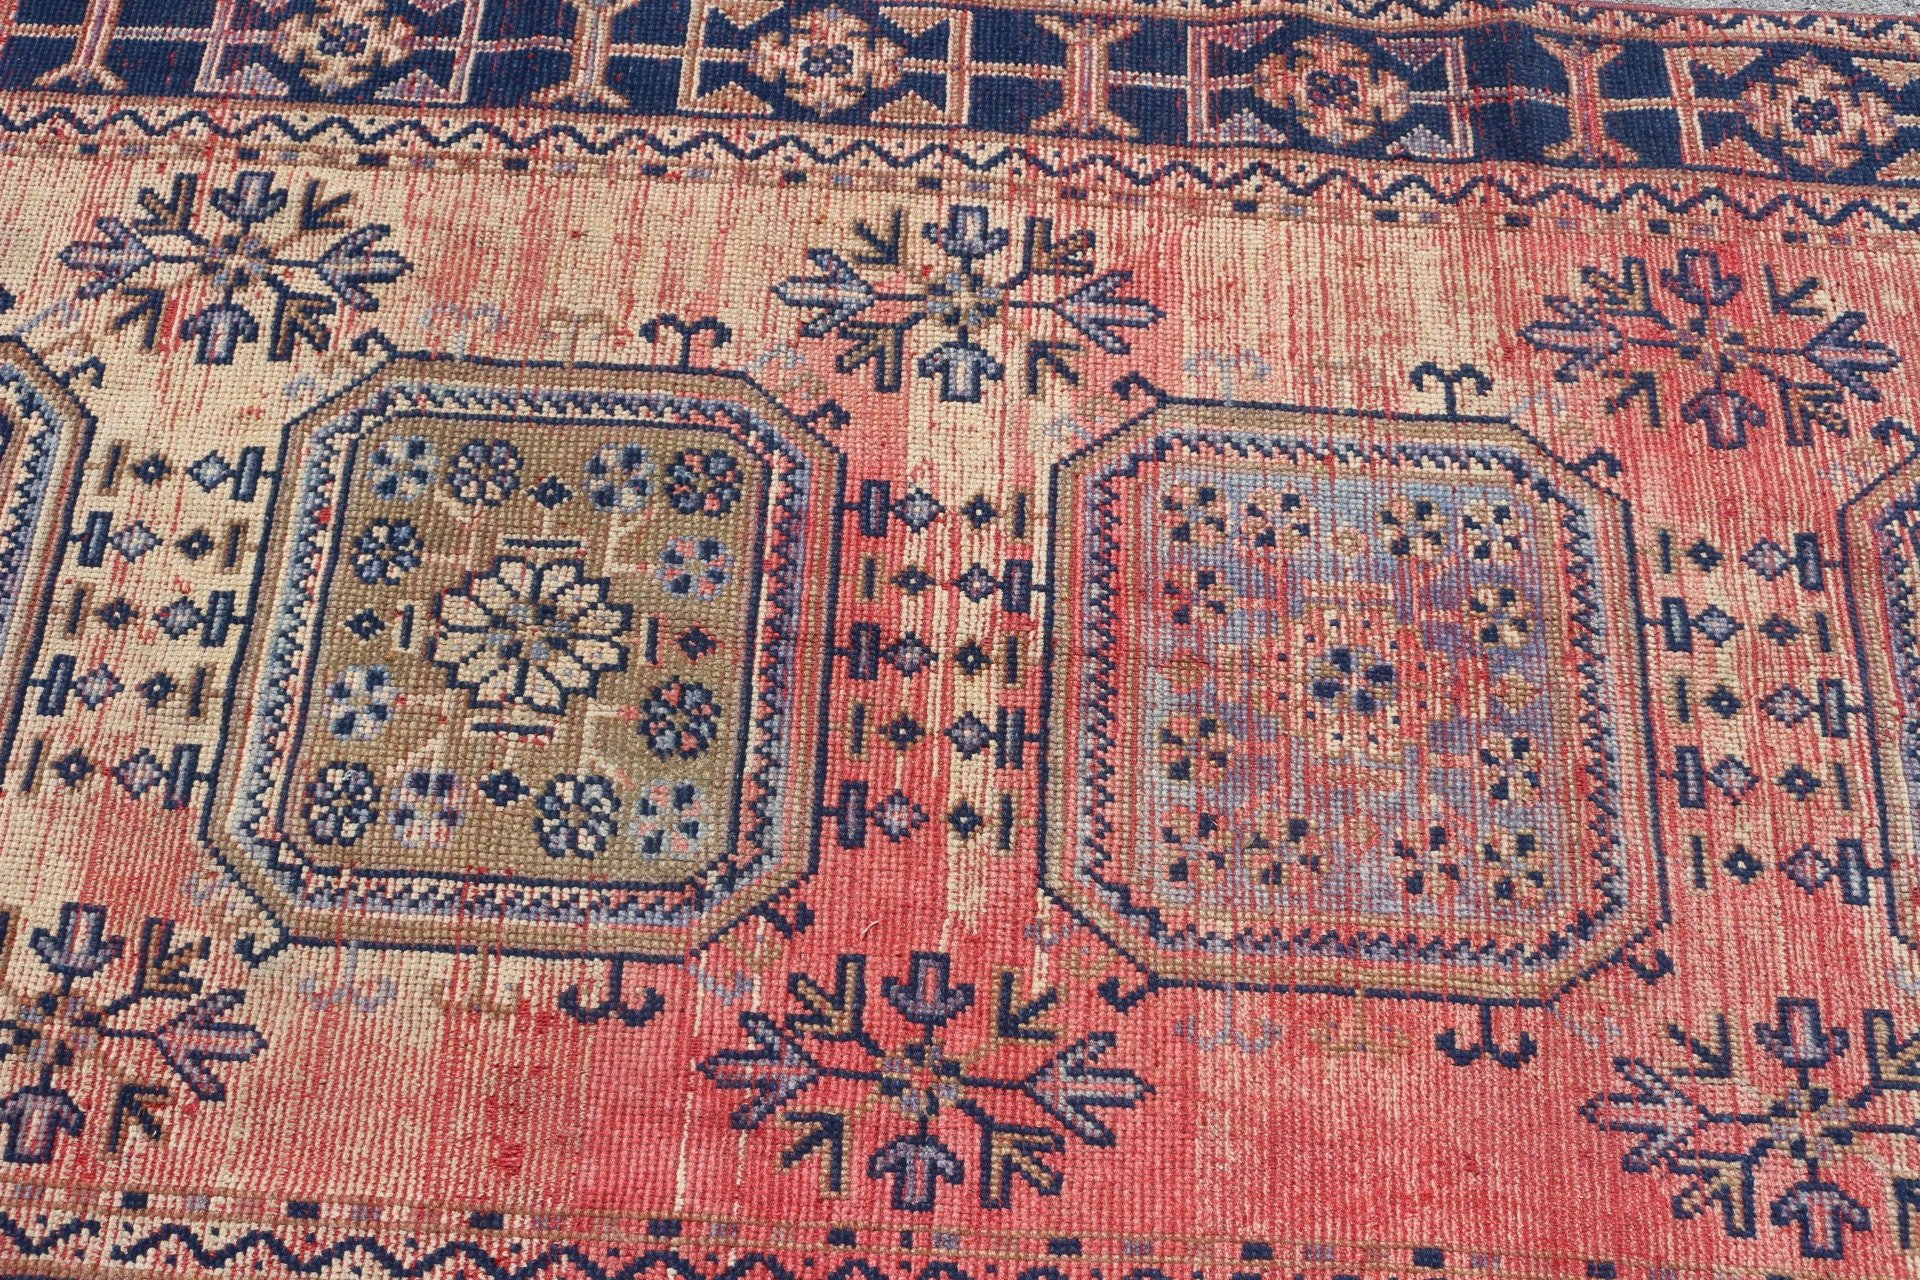 Floor Rug, Antique Rug, Moroccan Rug, 3.9x7.3 ft Area Rug, Rugs for Indoor, Vintage Rugs, Red Oushak Rug, Turkish Rug, Bedroom Rugs